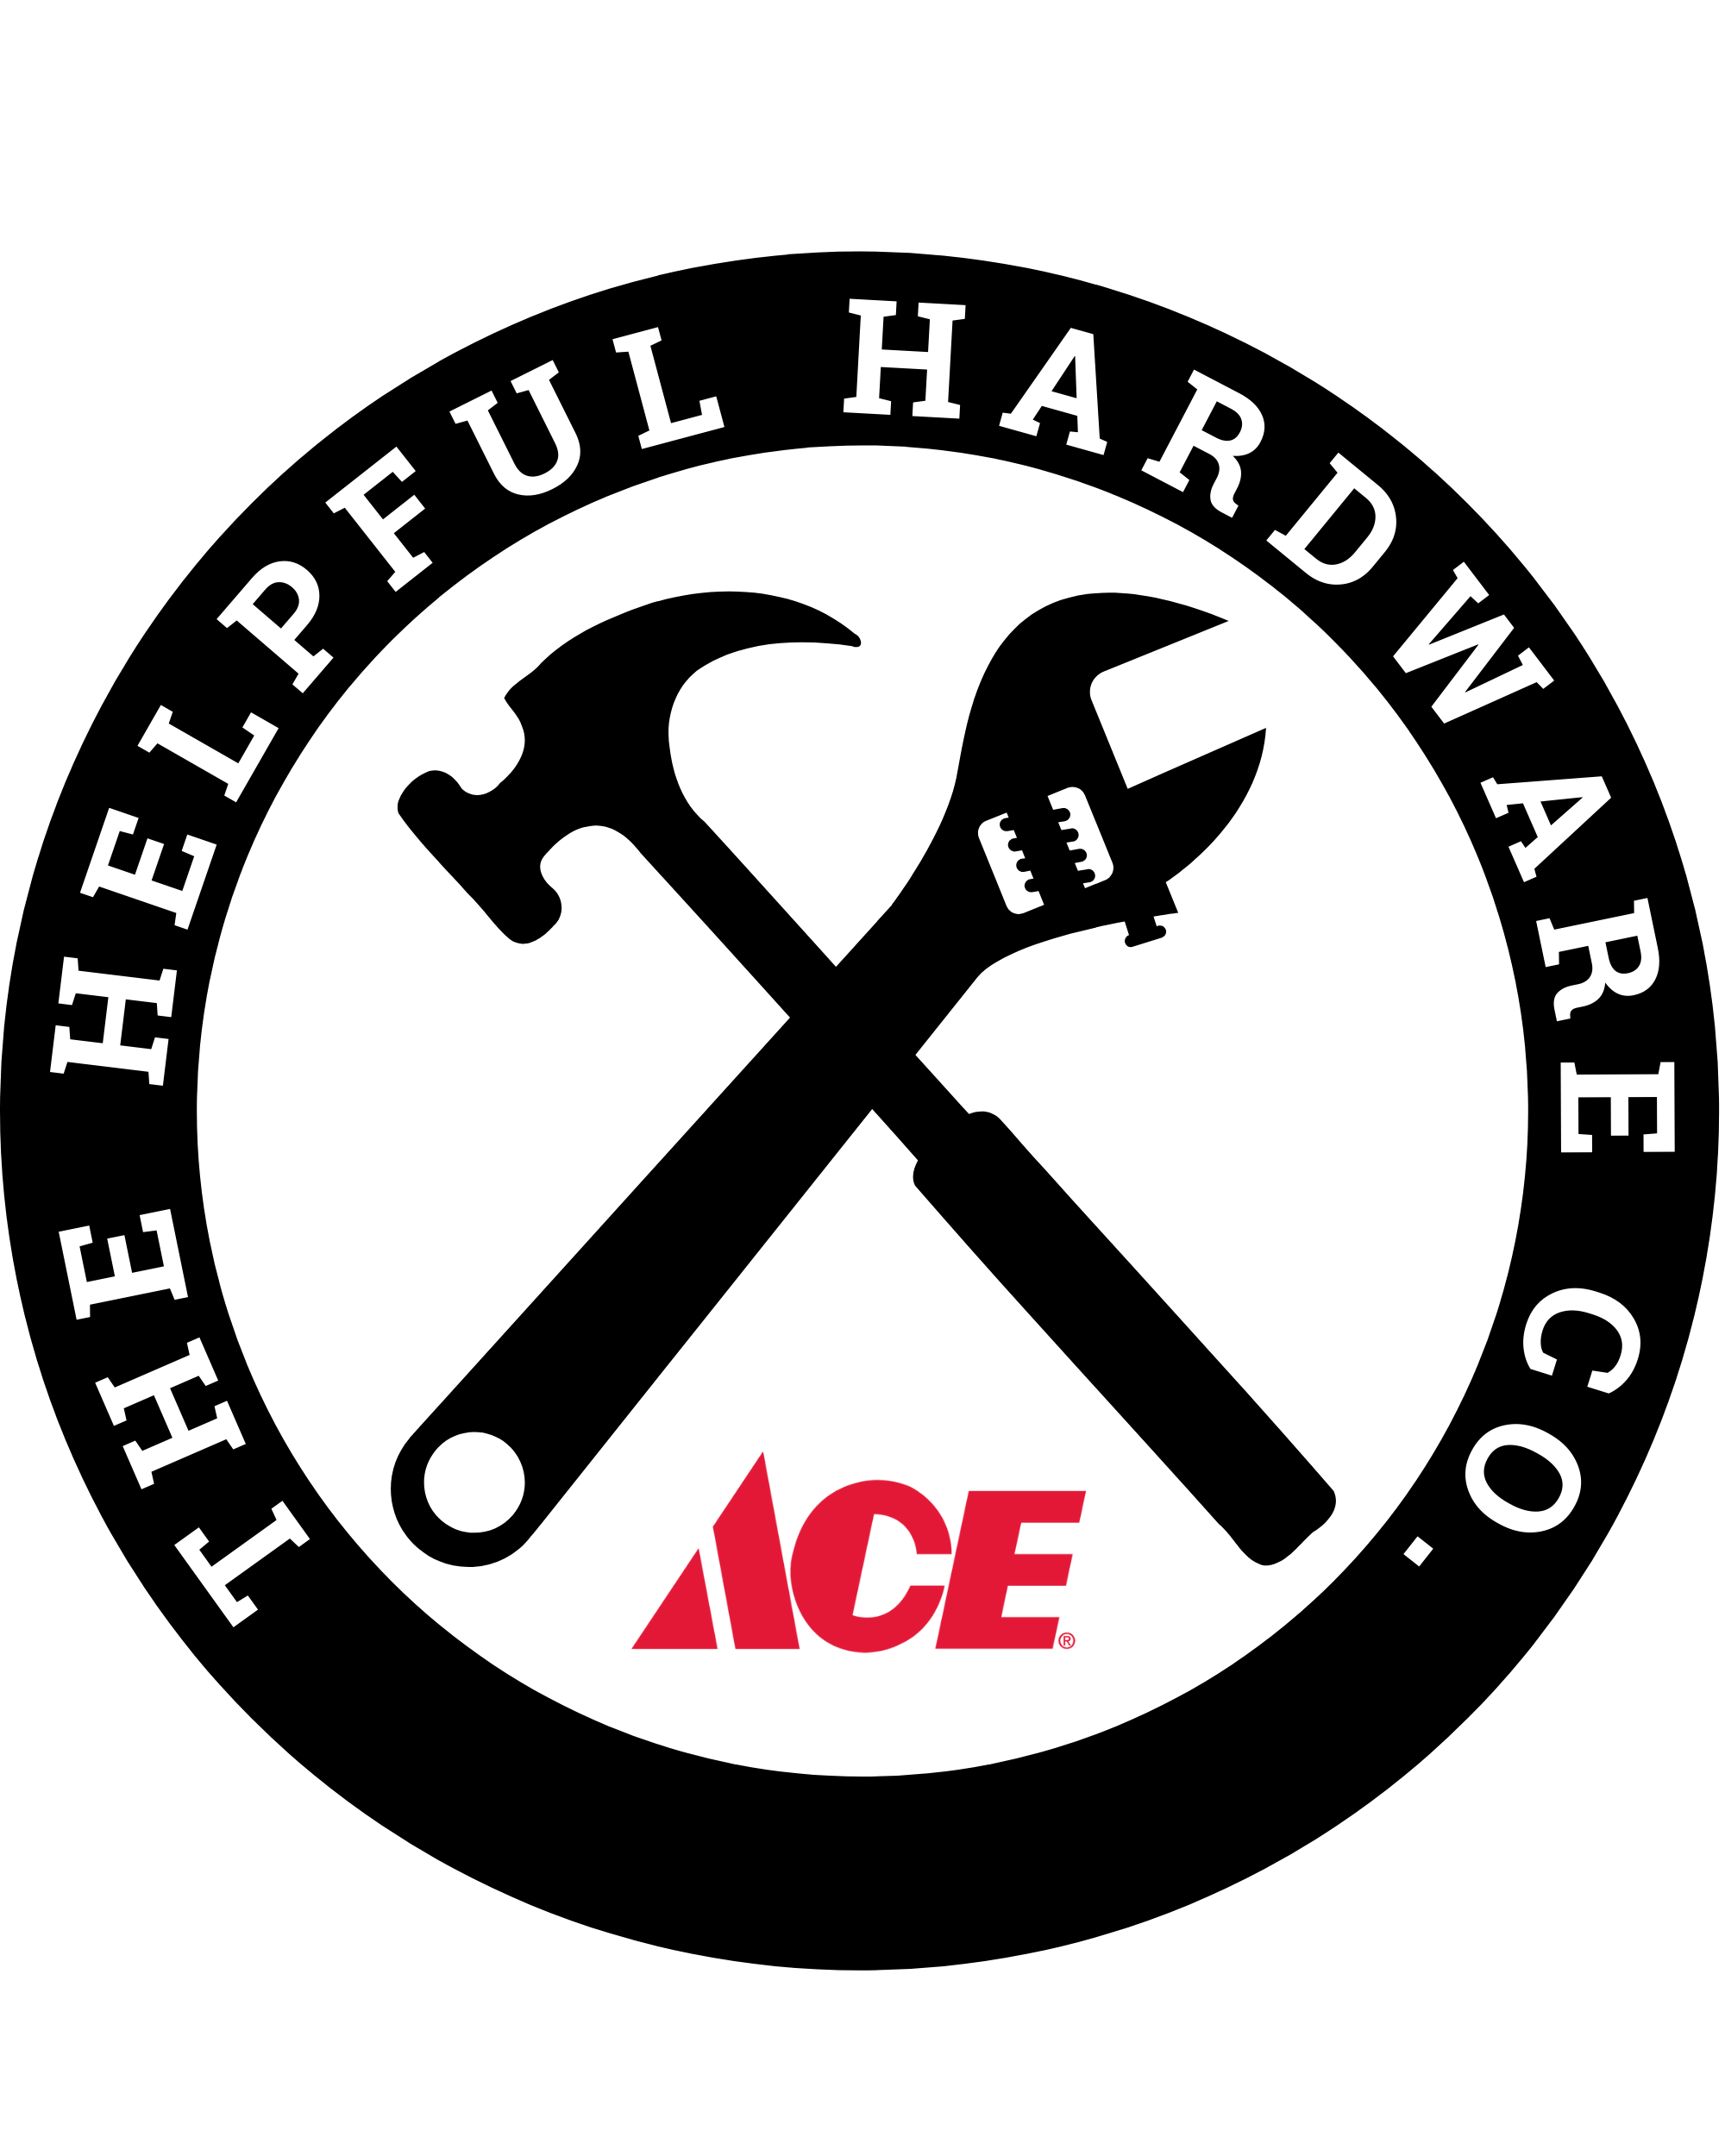 The Helpful Hardware Co.